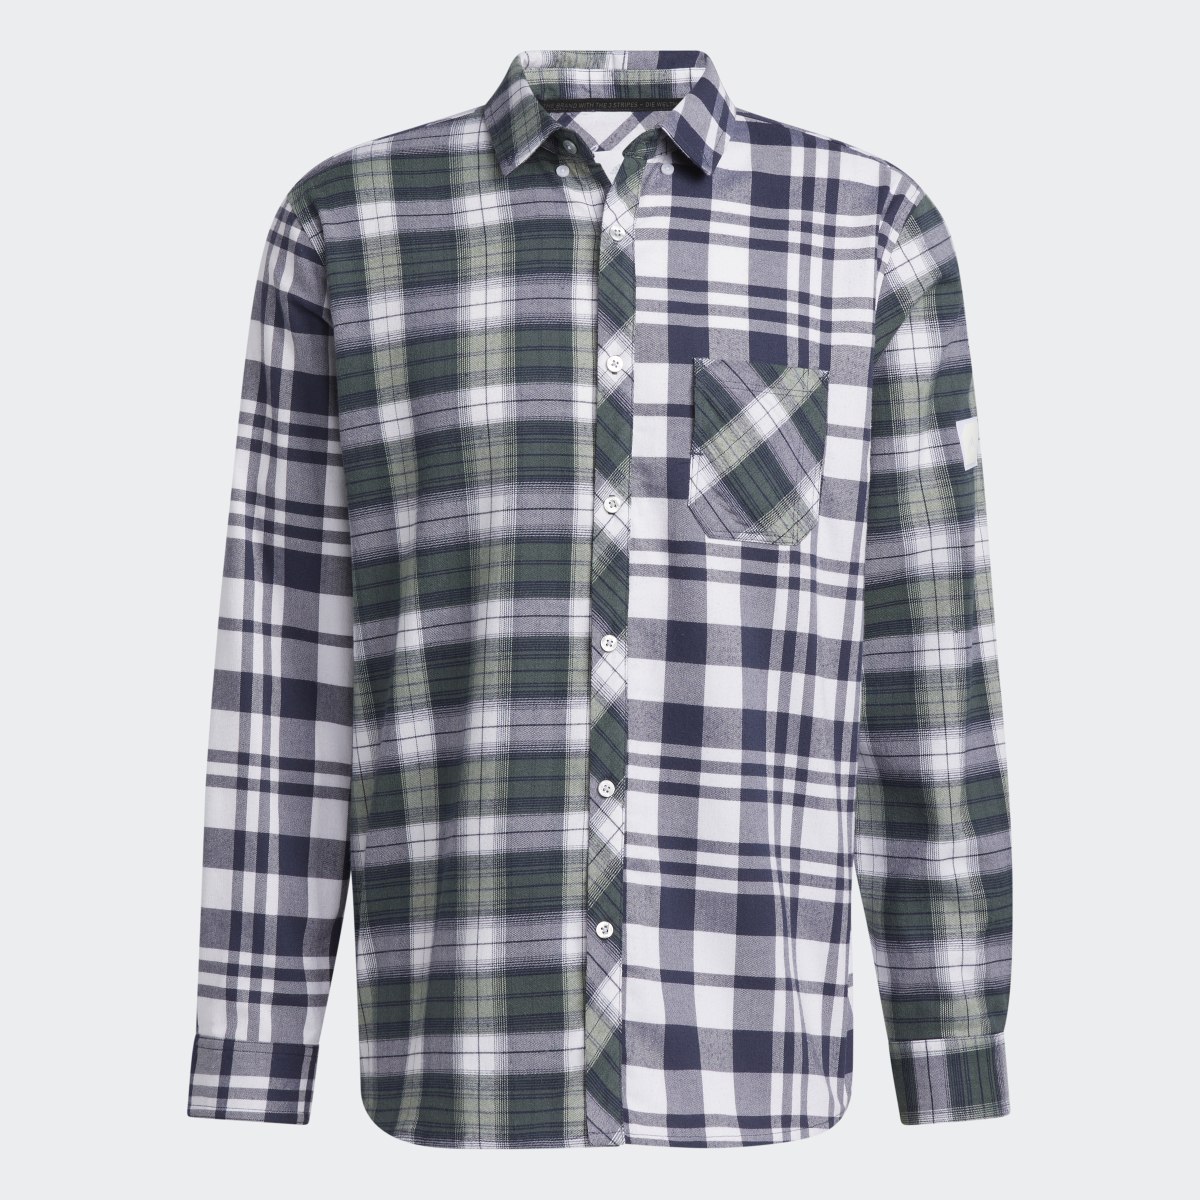 Adidas Adicross Flannel Long Sleeve Shirt. 5